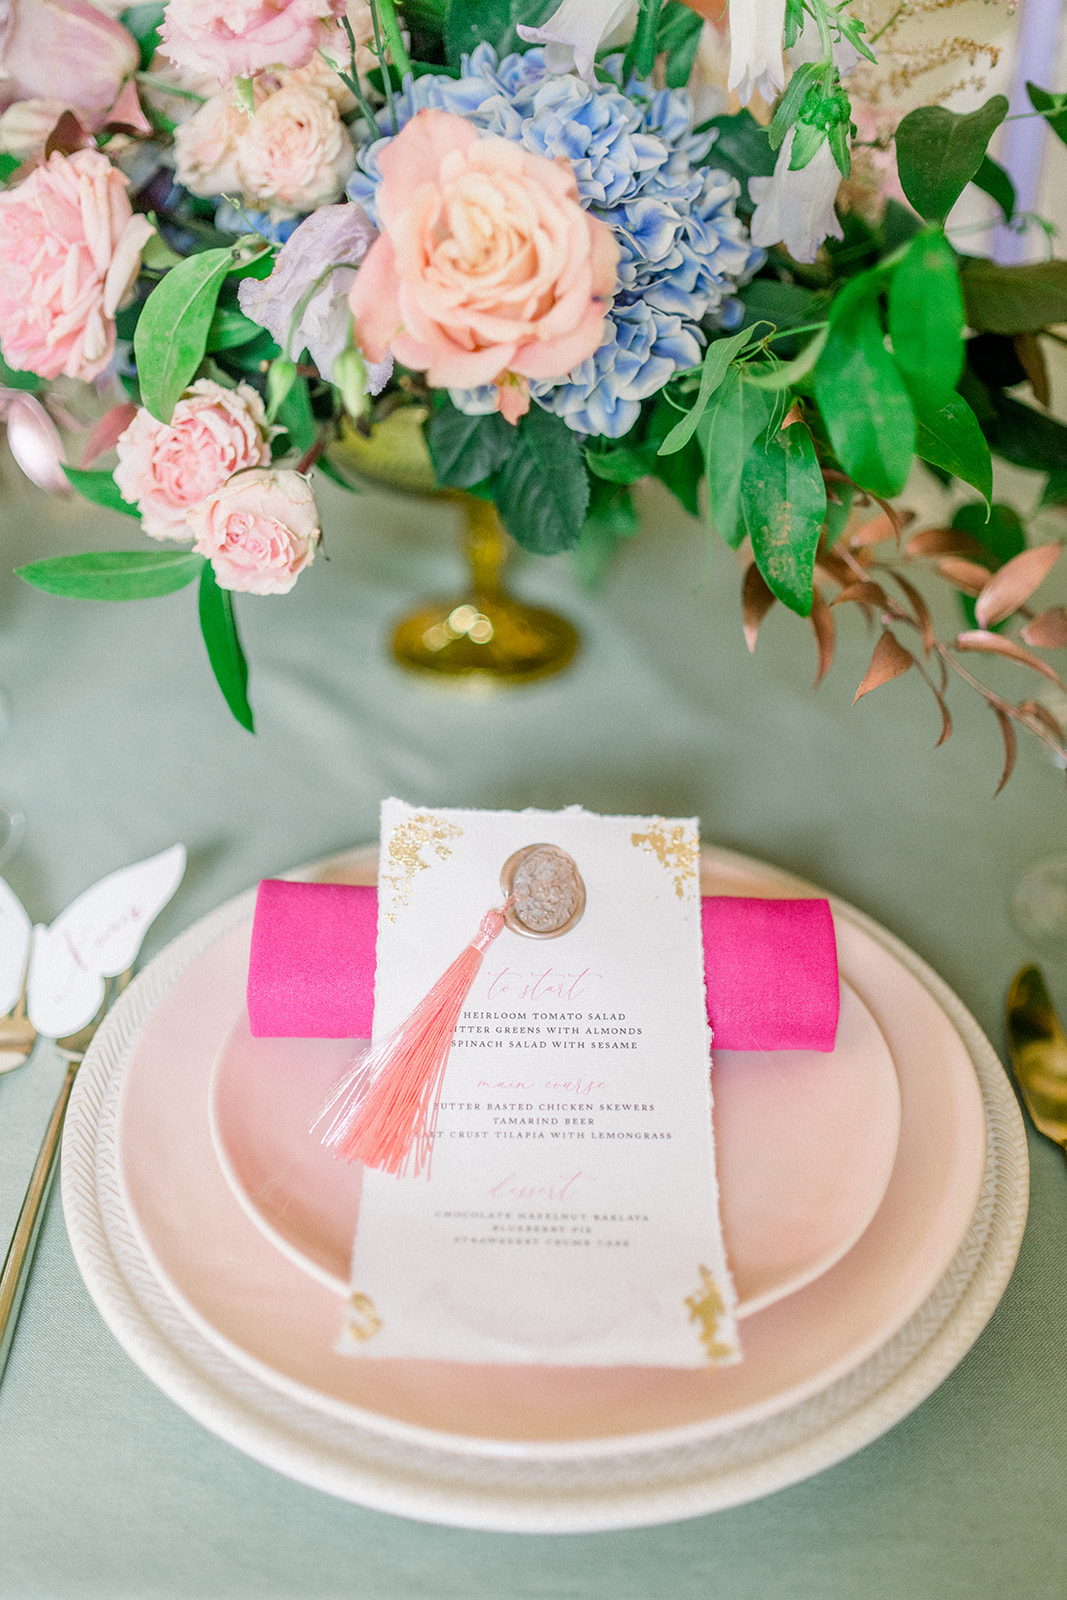 Elegant pink and green wedding menu by Elephant Limbo.